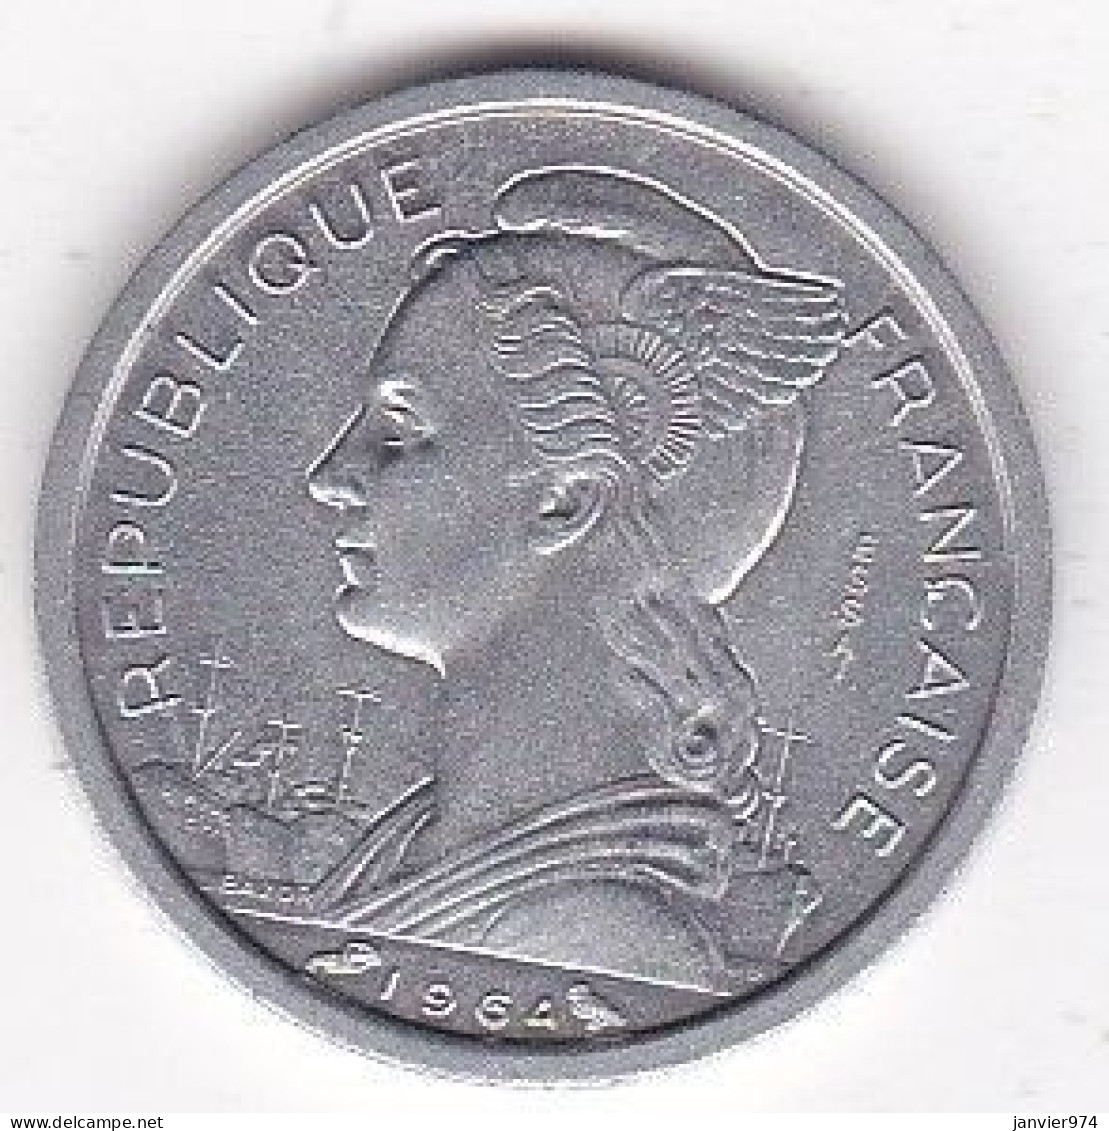 Archipel Des Comores , Republique Française 1 Franc 1964 ESSAI , En Aluminium LEC# 32, UNC - Comoros